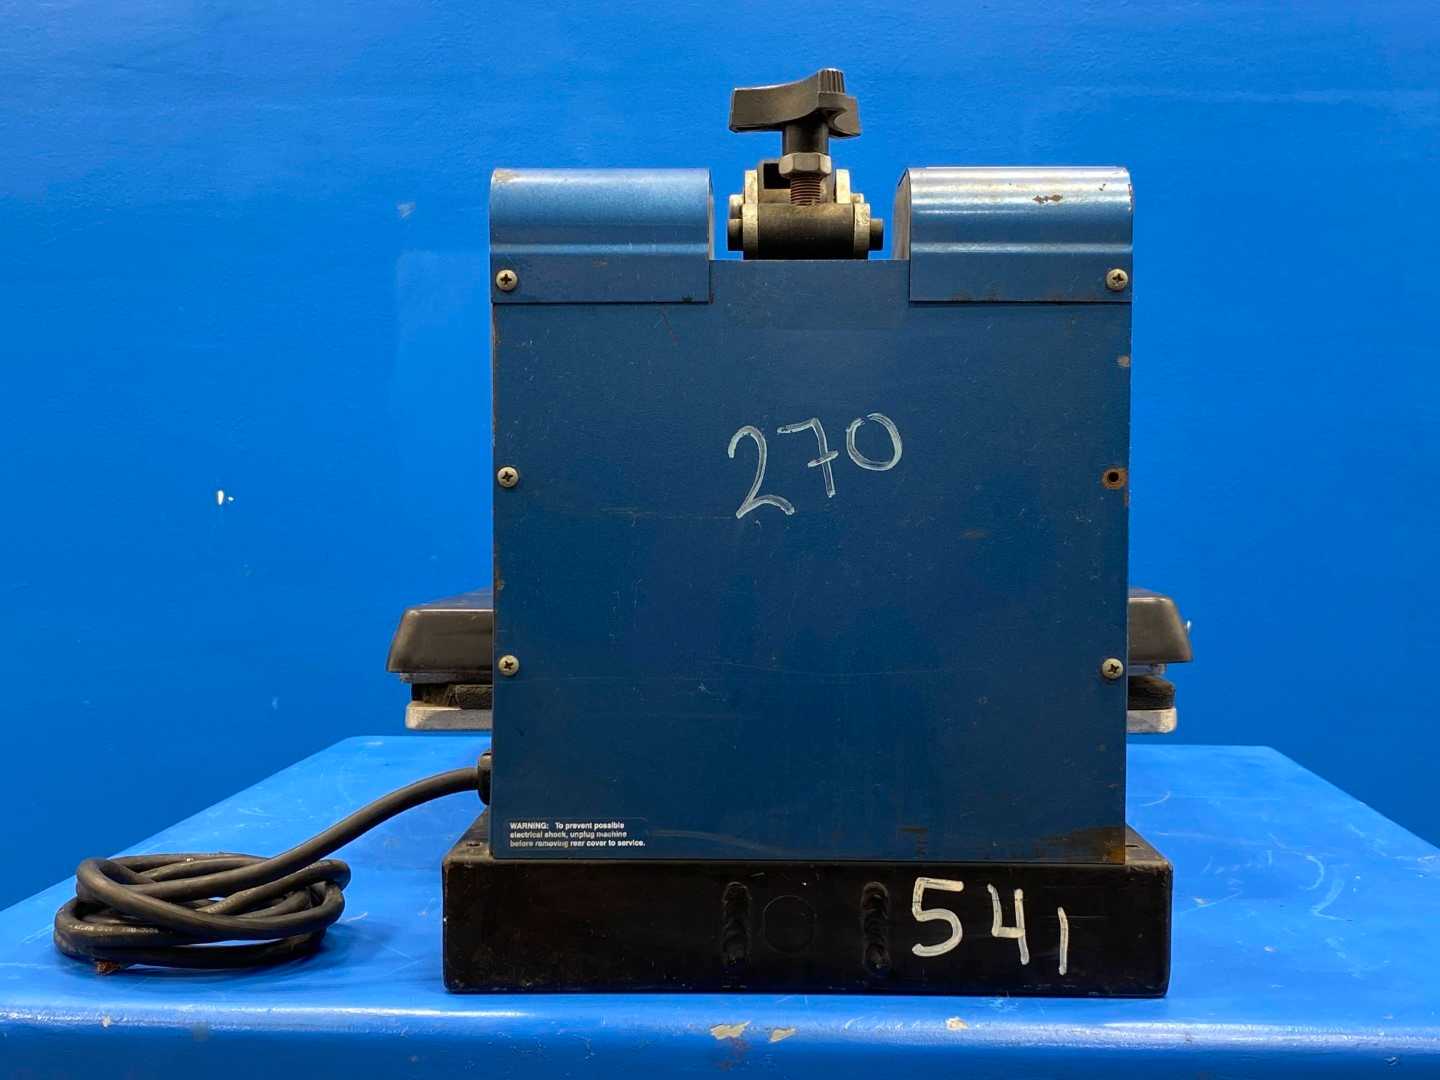 HIX HT-600 blue Manual Clamshell Heat Press